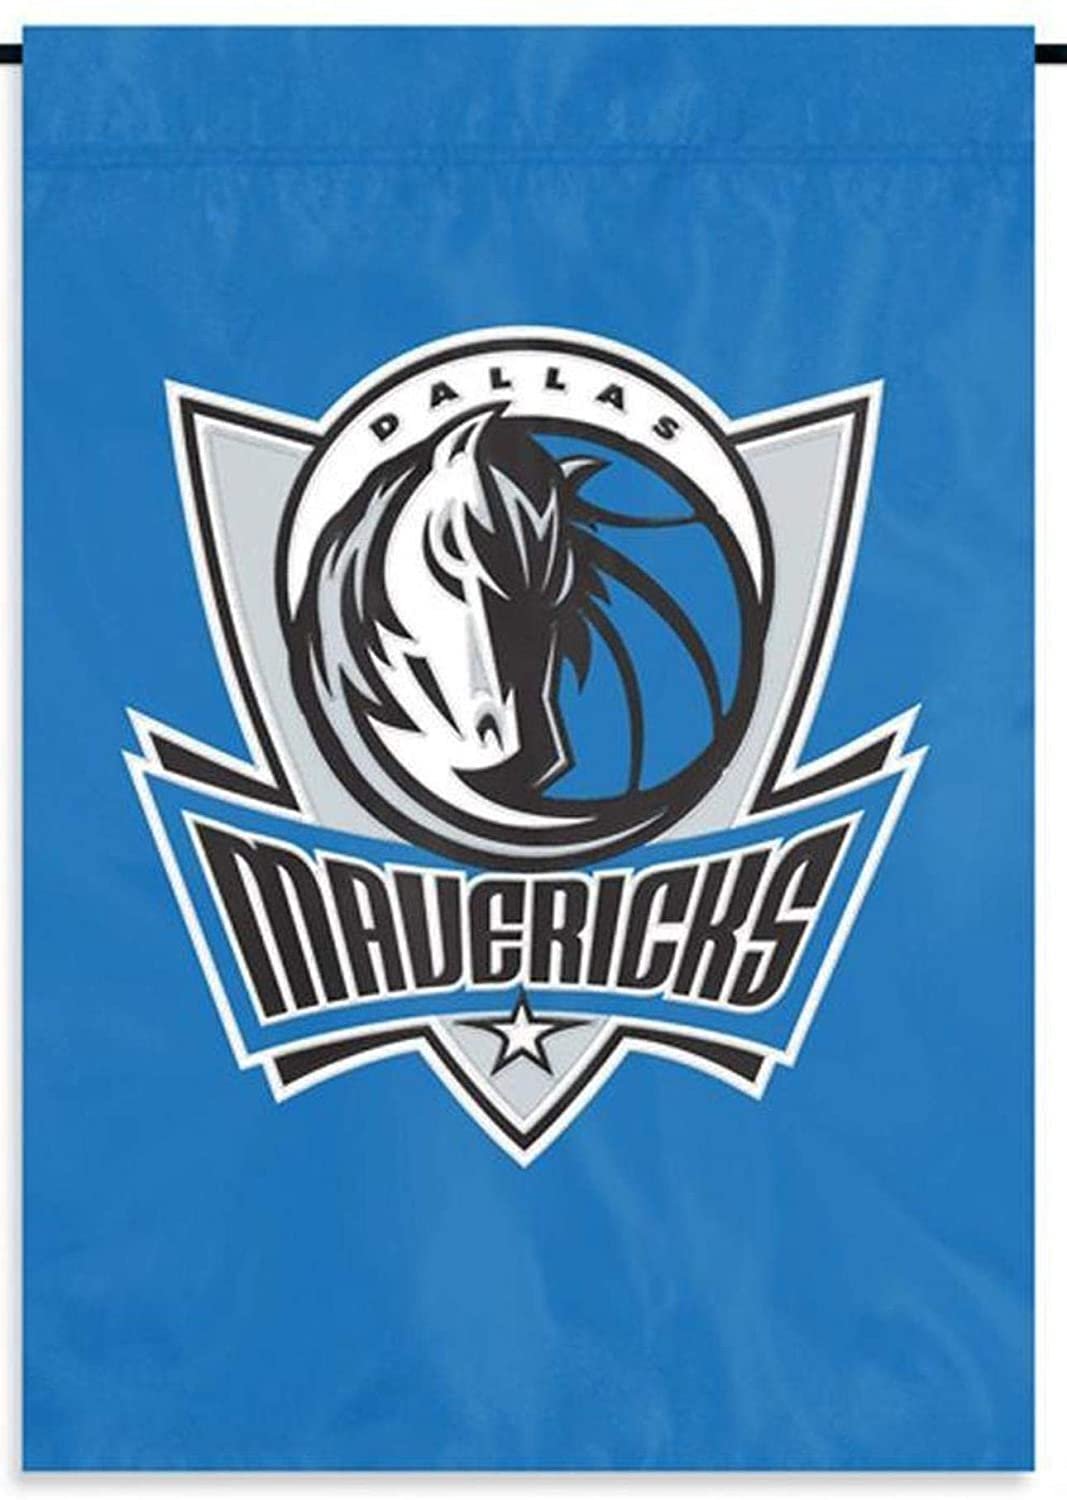 Dallas Mavericks Premium Garden Flag Banner Applique Embroidered 12.5x18 Inch